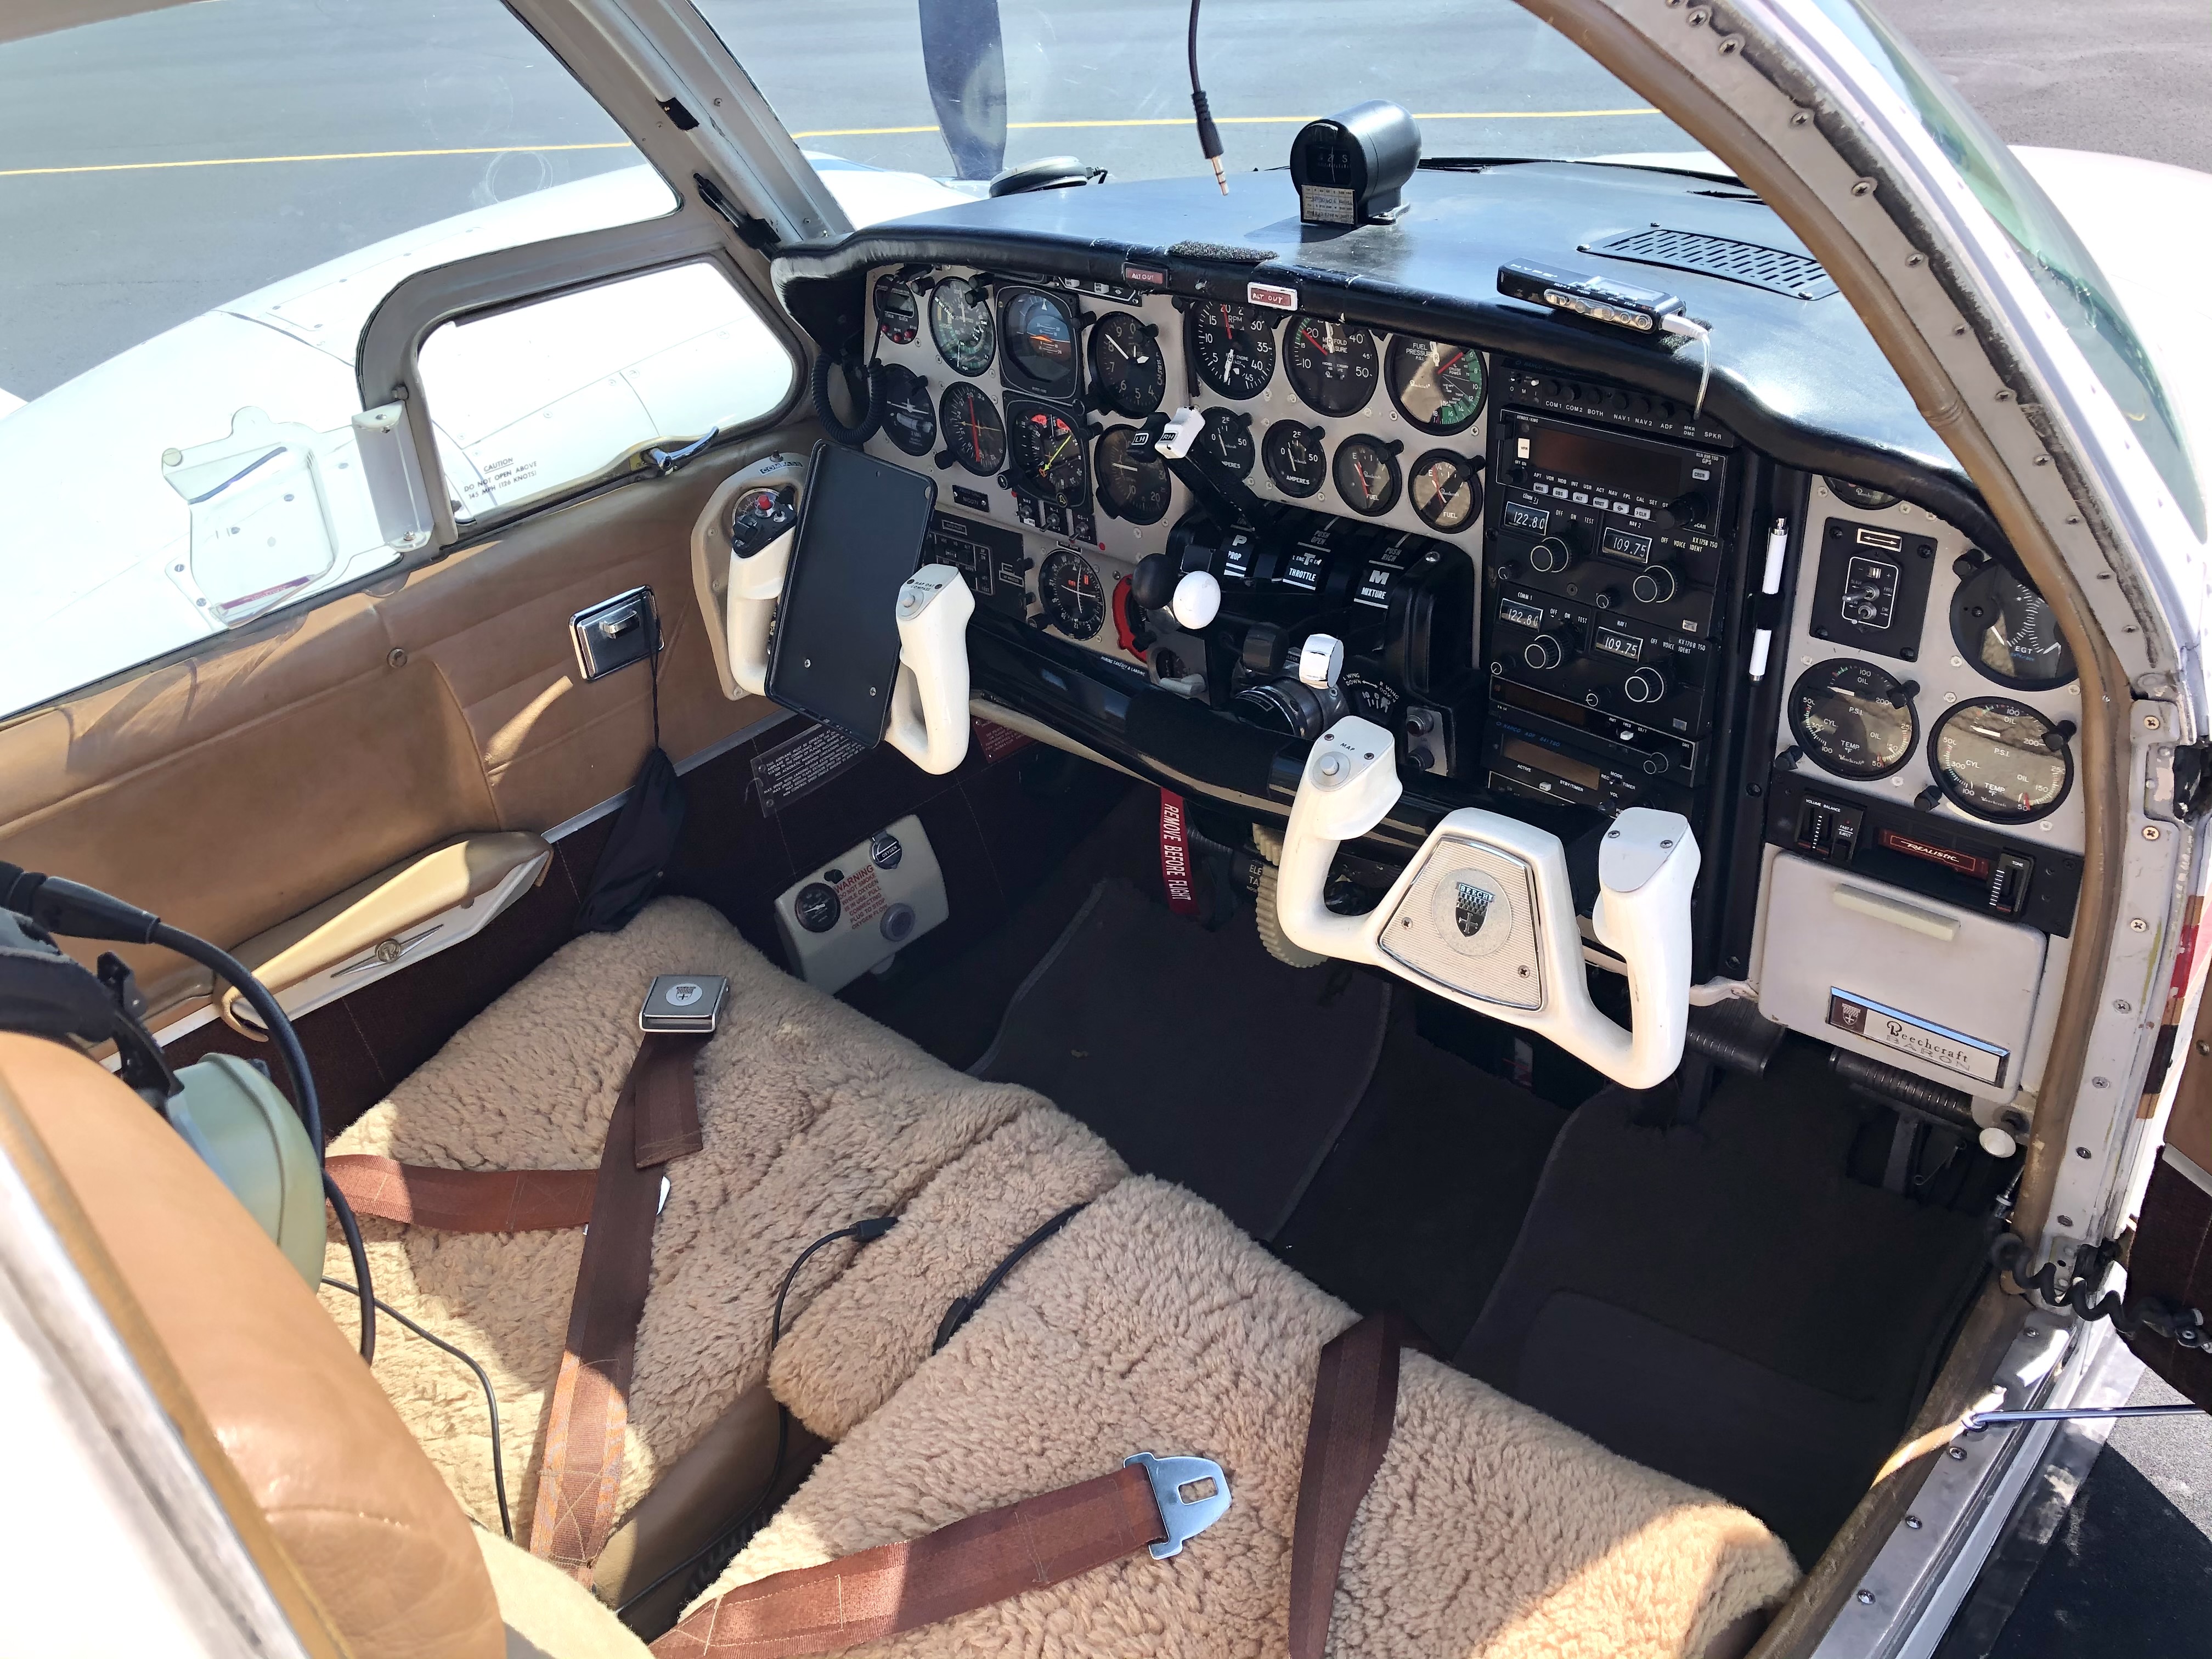 1968 Beechcraft B55 Baron